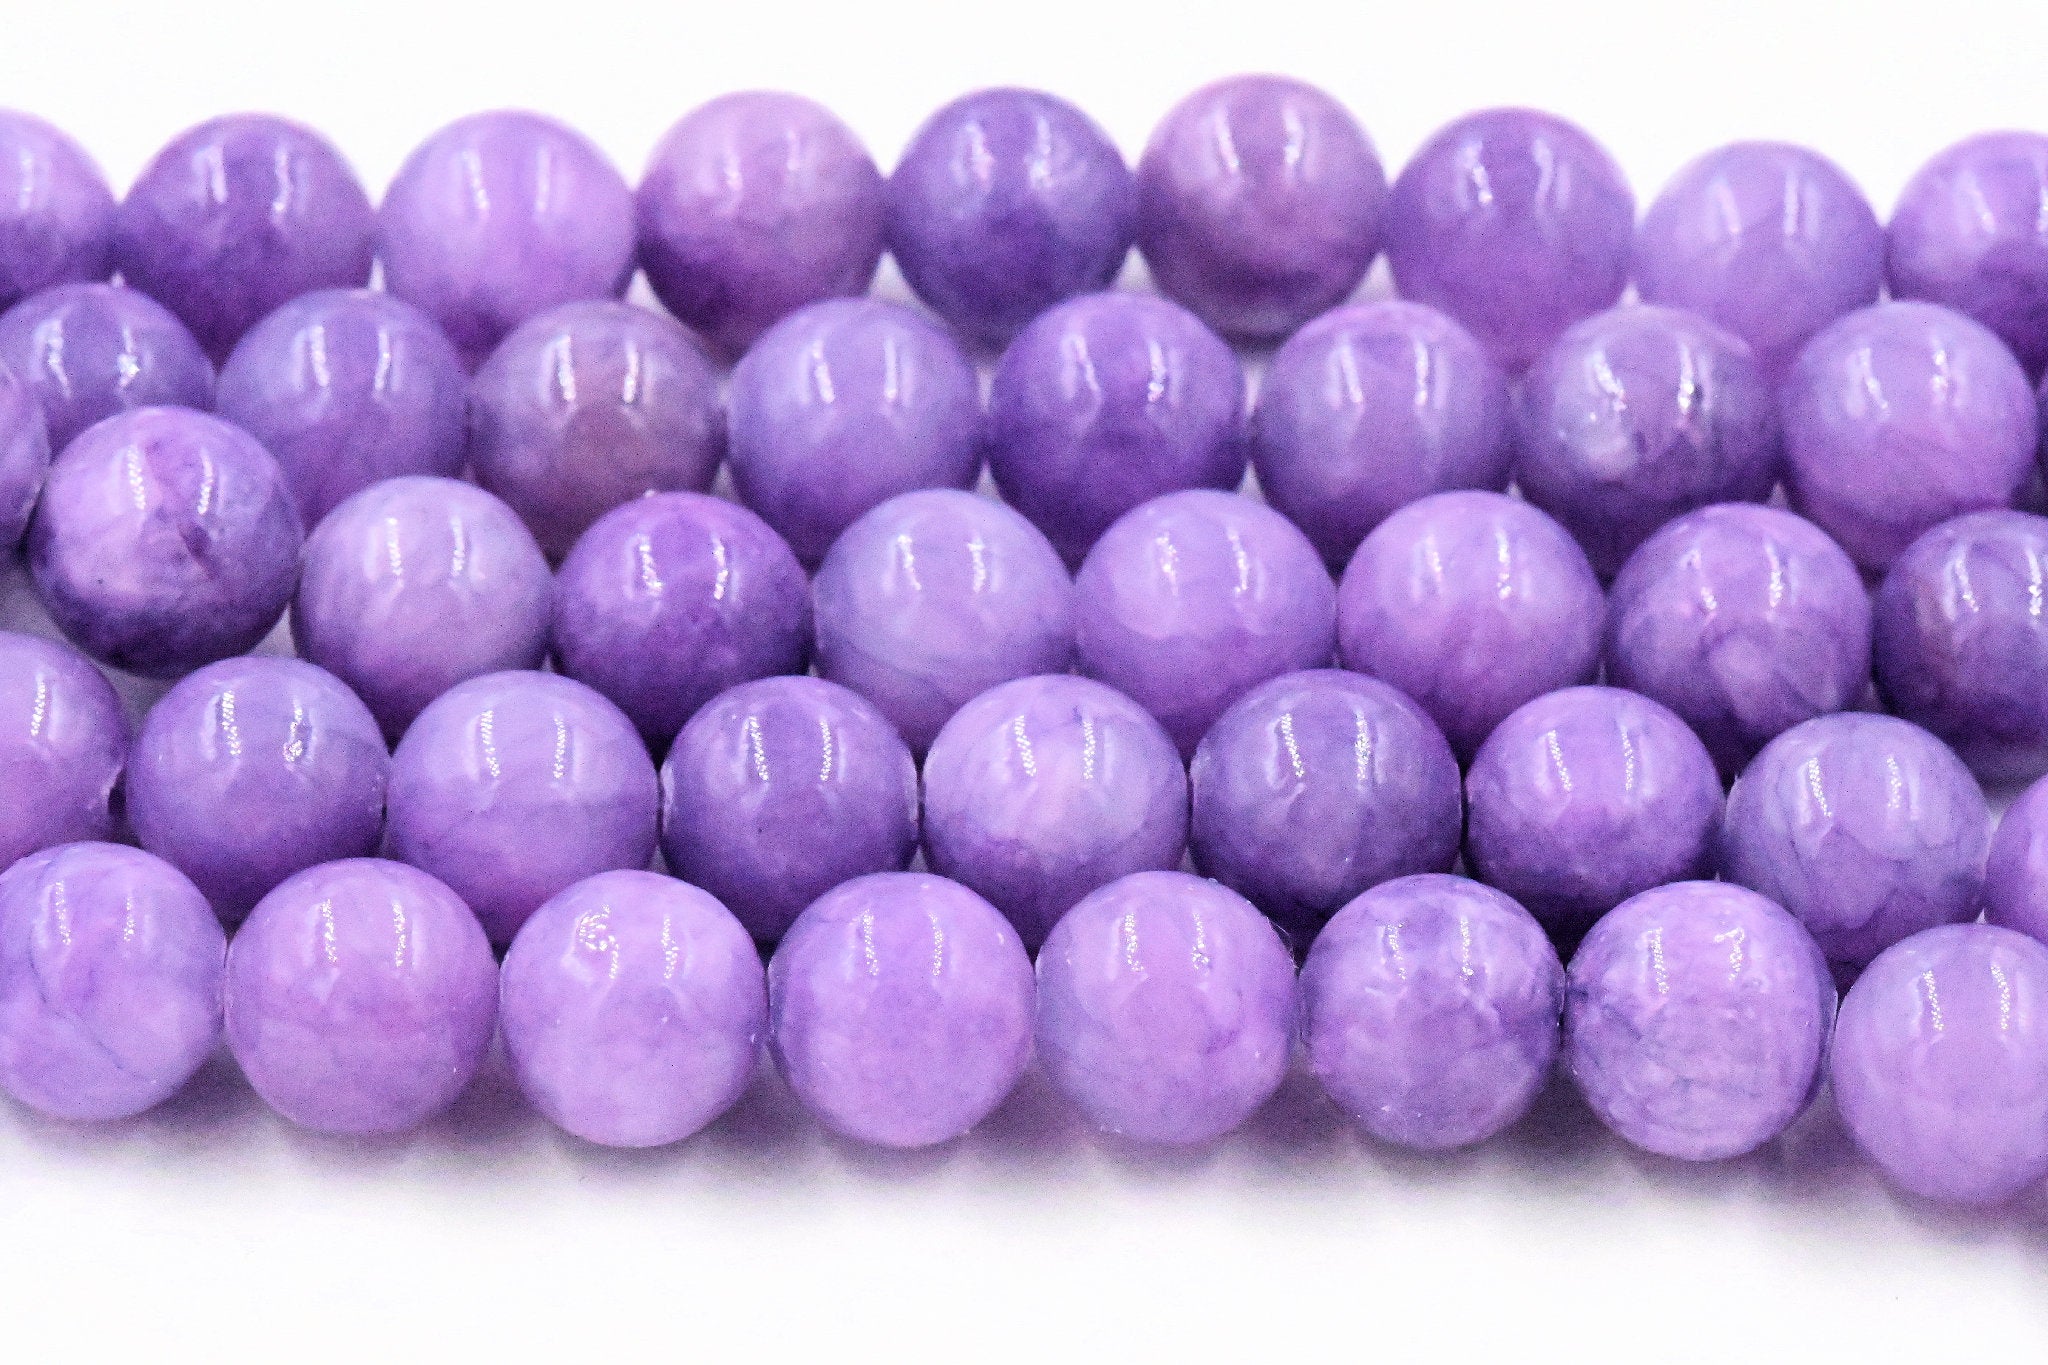 Milky Lavender Jade, 6mm, 8mm, 10mm Purple Jade Round Beads -15 inch strand